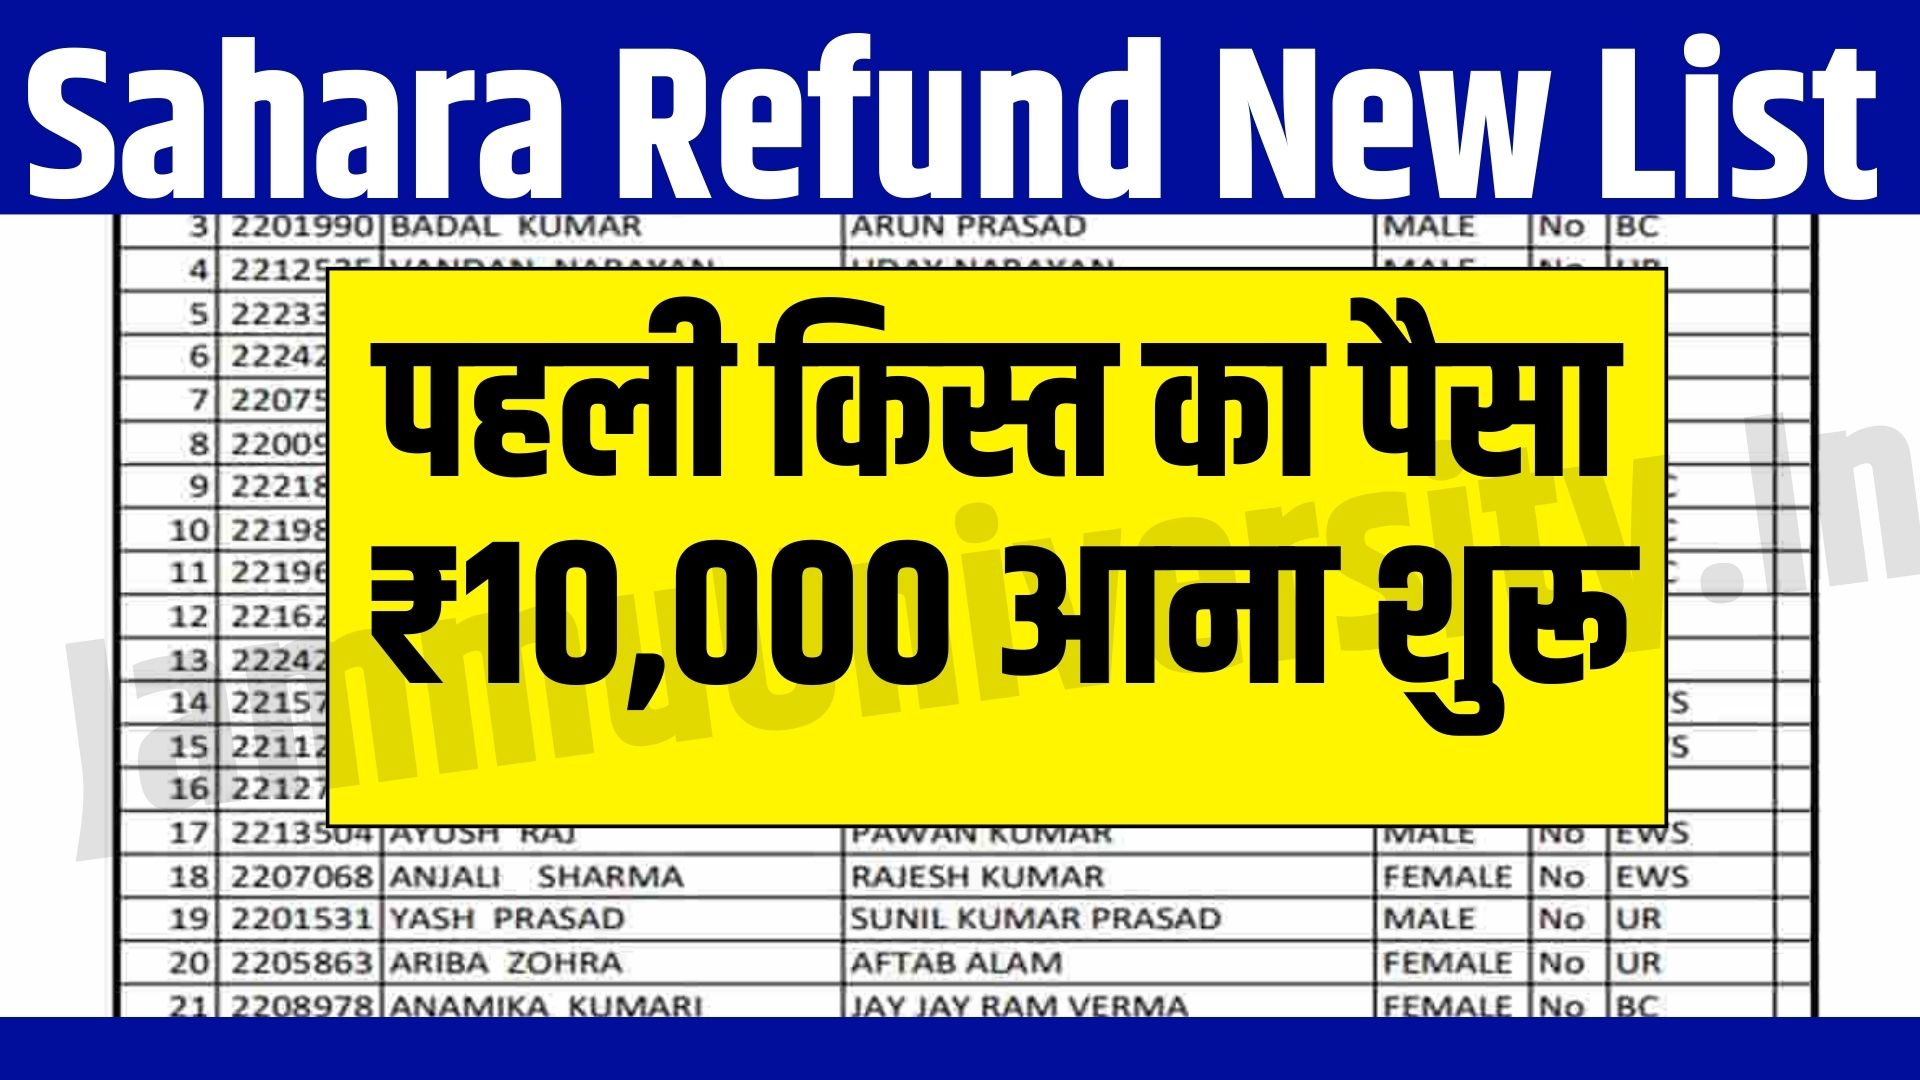 Sahara India Refund New List